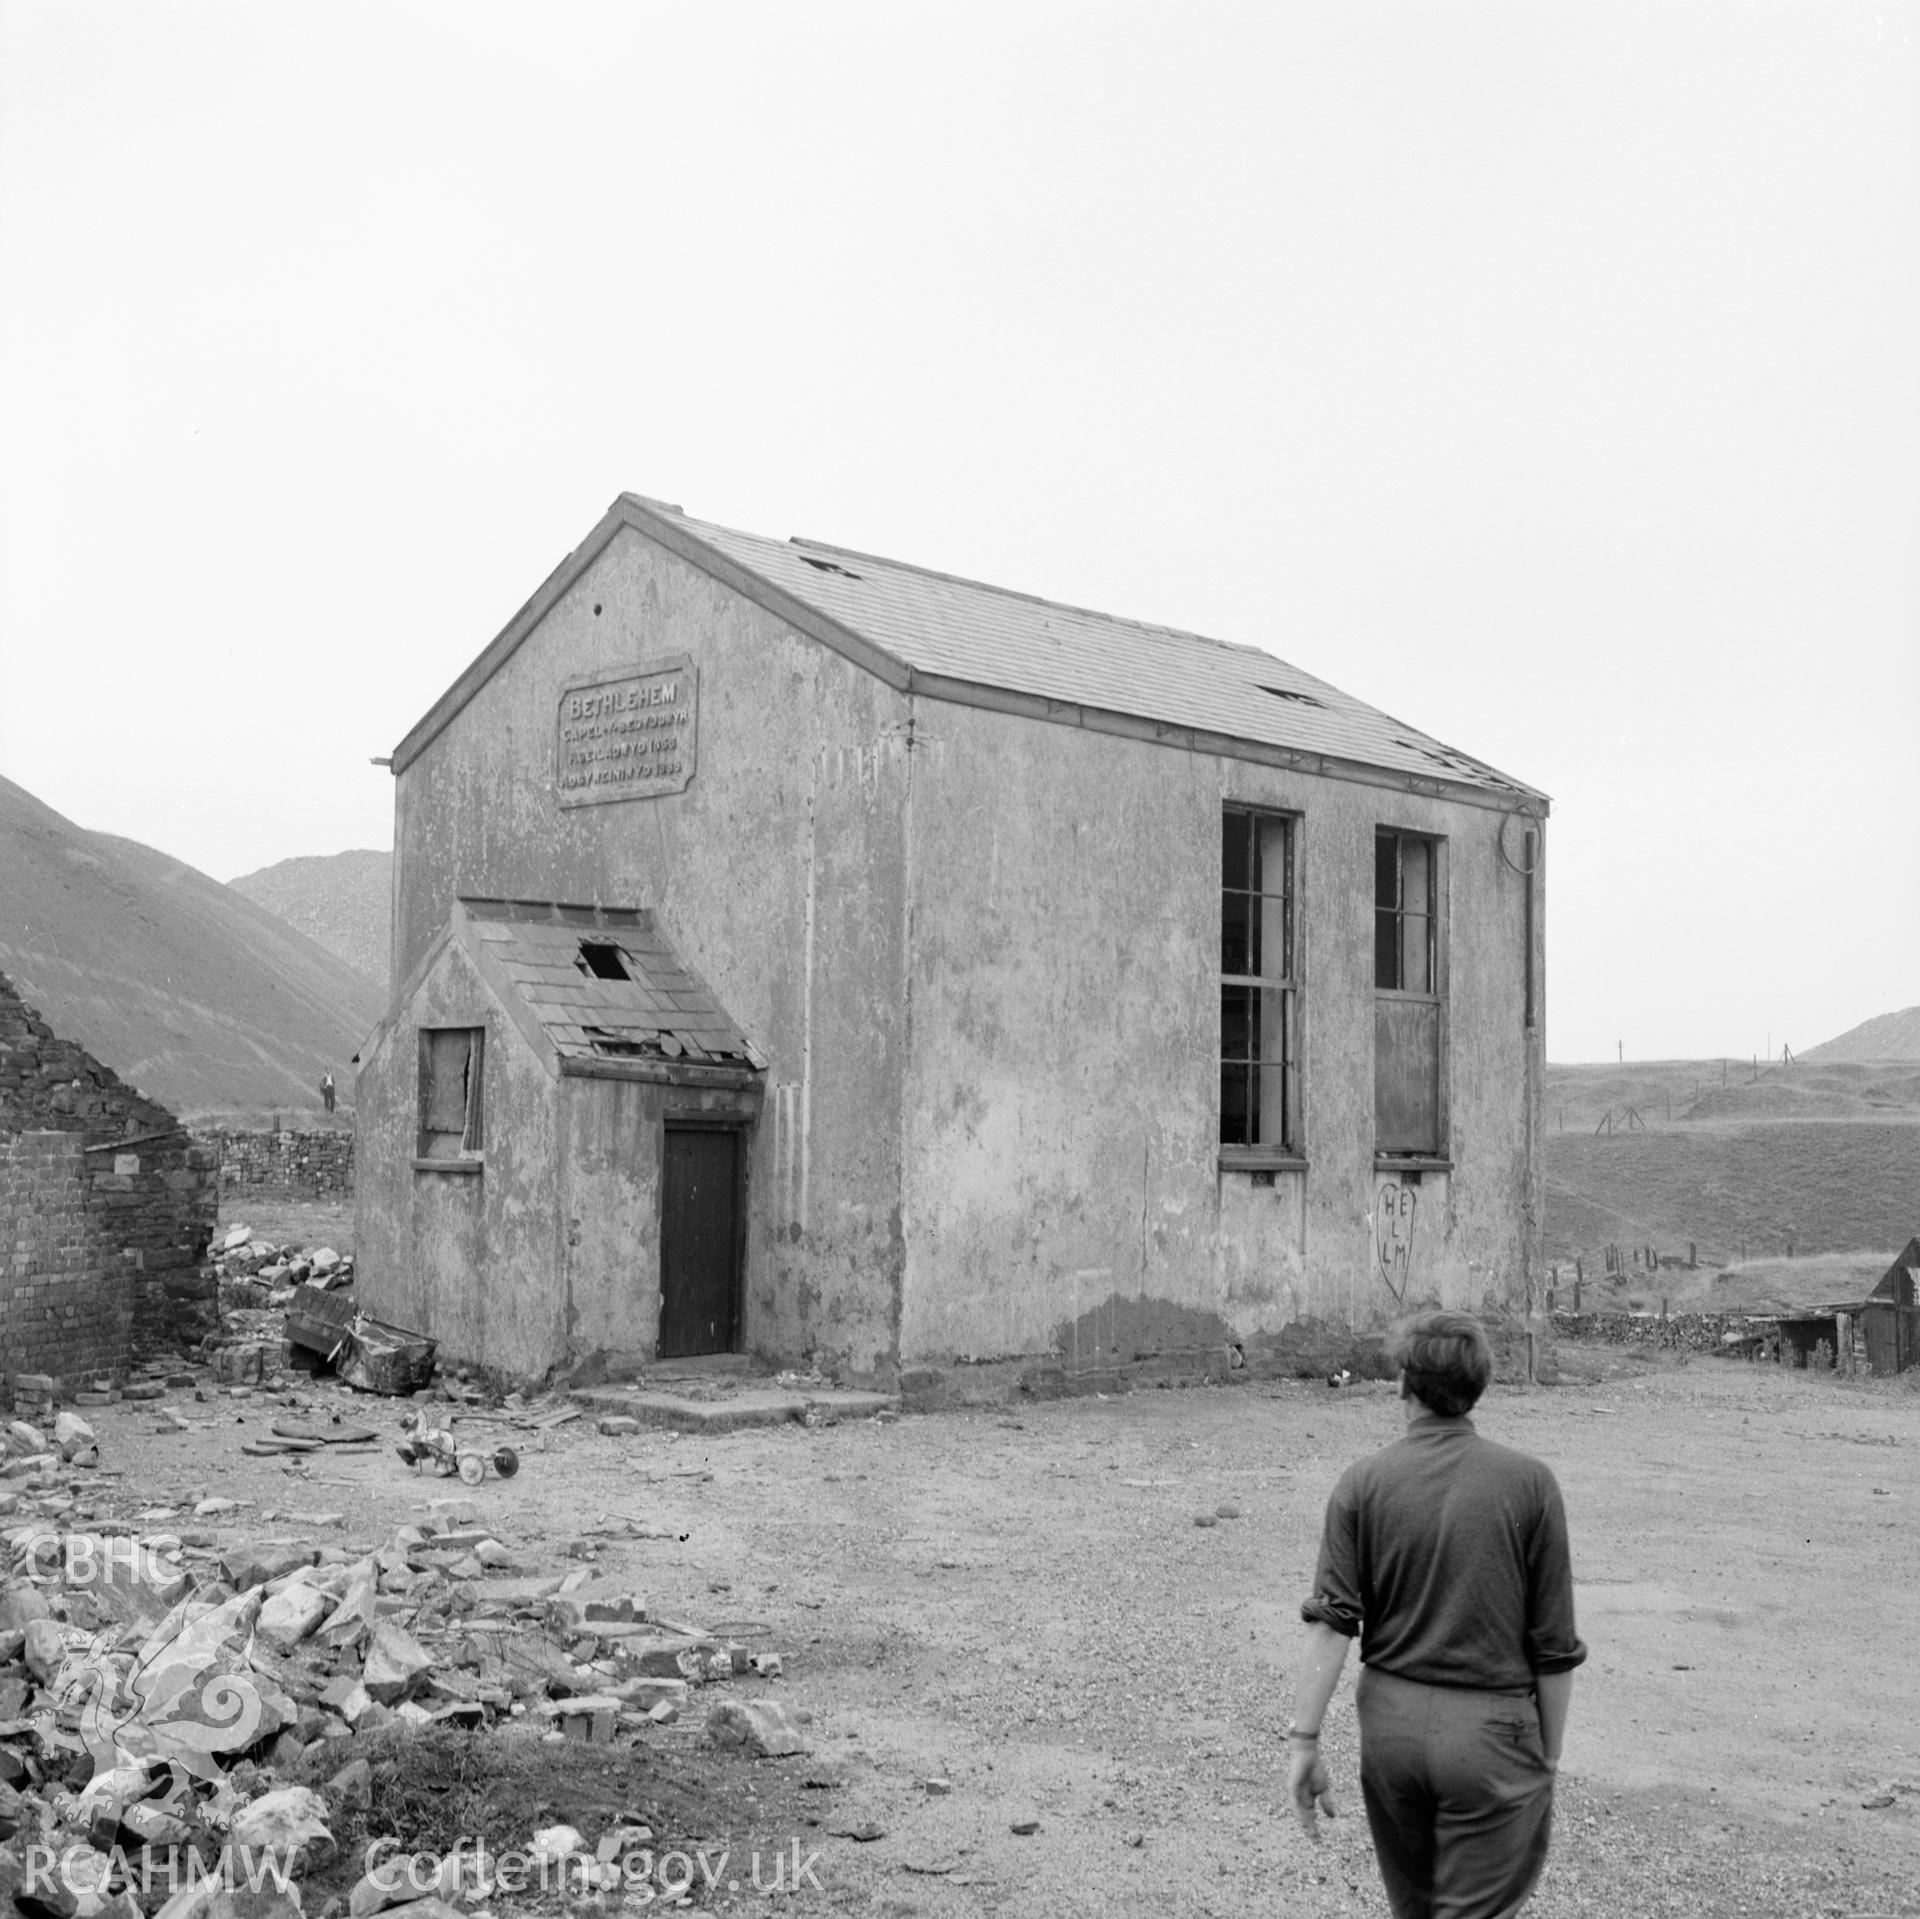 Digital copy of a black and white negative showing exterior view of Capel Bethlehem, Capel-y-bedyddwyr, taken by Douglas Hague.